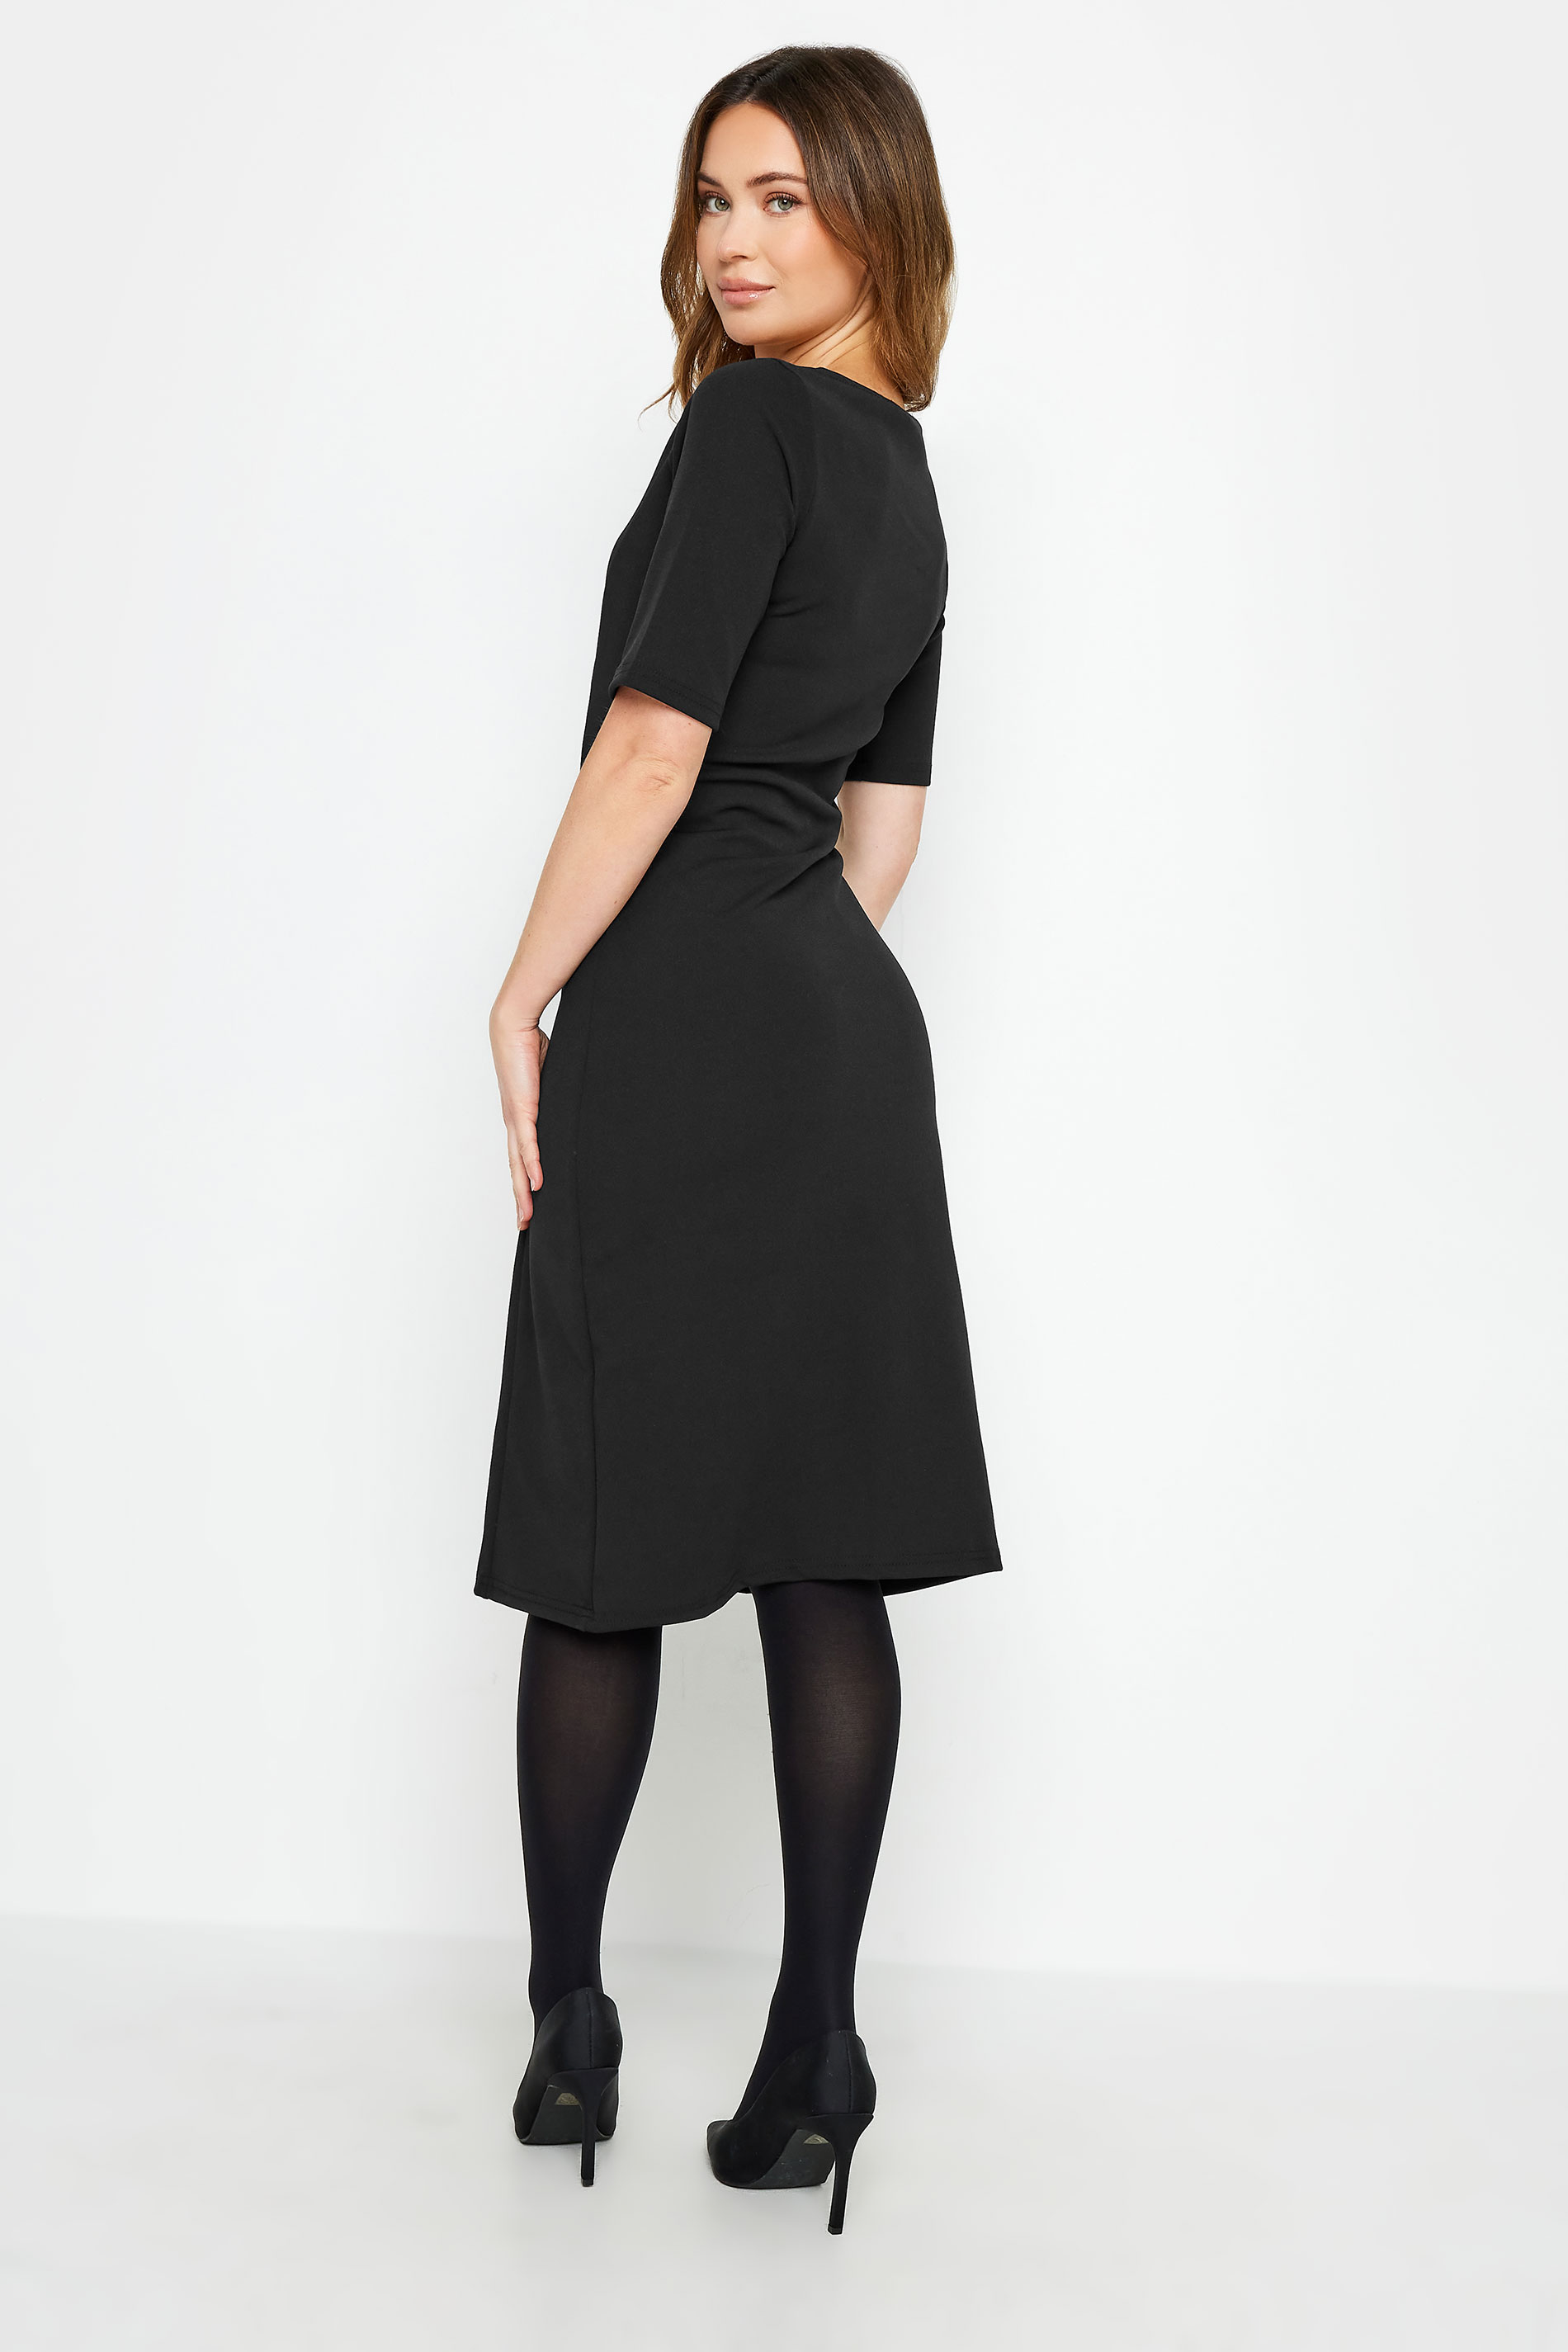 M&Co Petite Black Scuba Notch Neck Midi Dress | M&Co 3